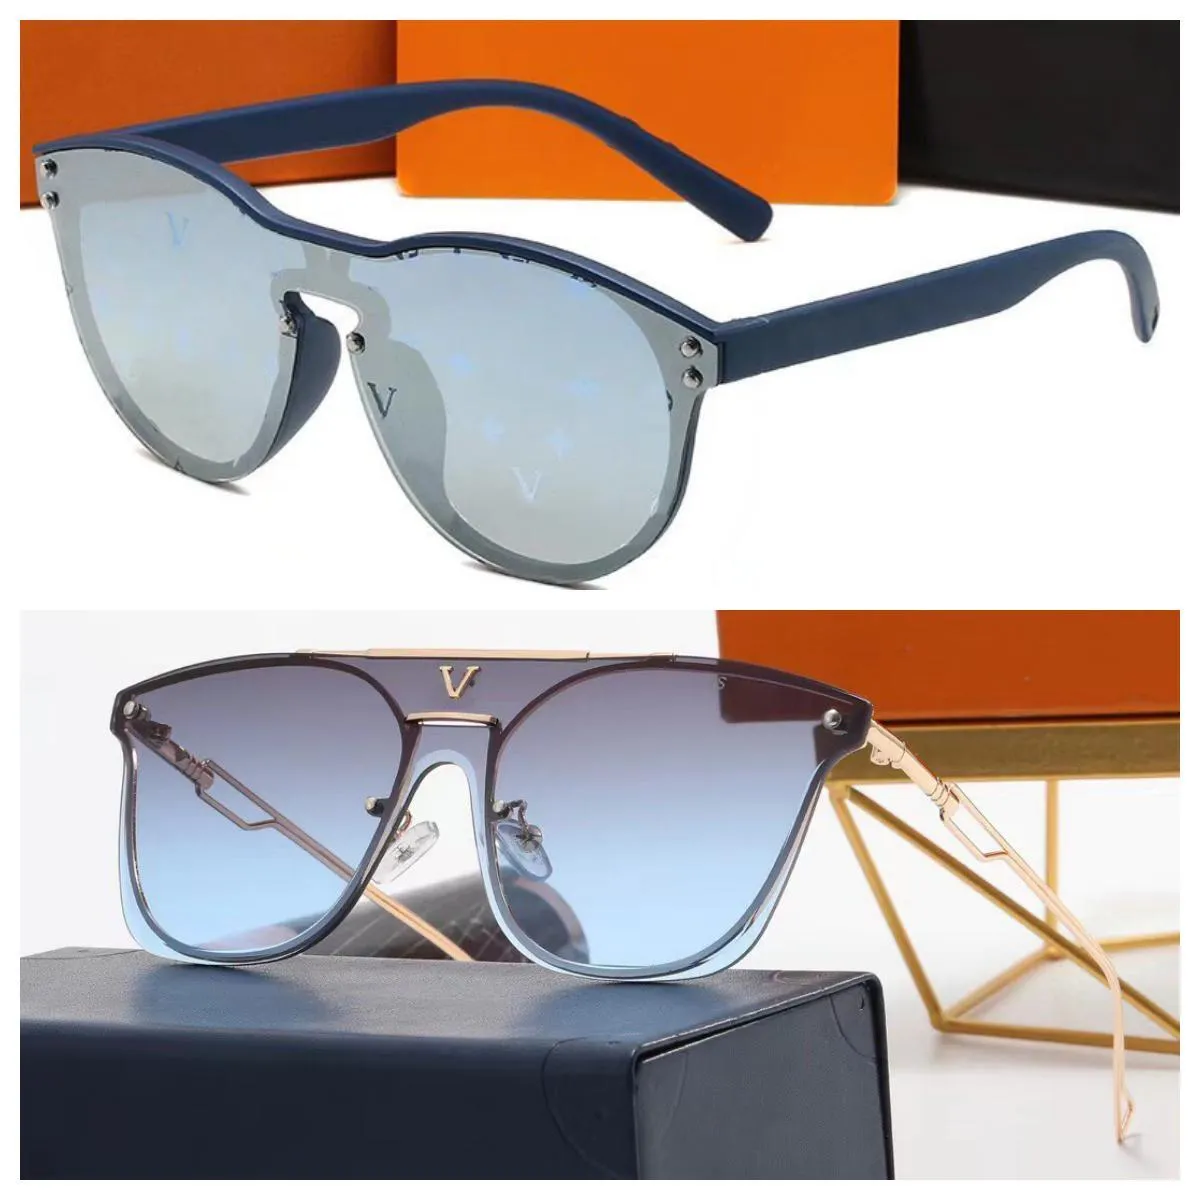 Occhiali da sole da uomo firmati occhiali da sole donna lunettes de soleil occhiali designer lente fiore PC full frame moda alta qualità lusso stampa occhiali neri